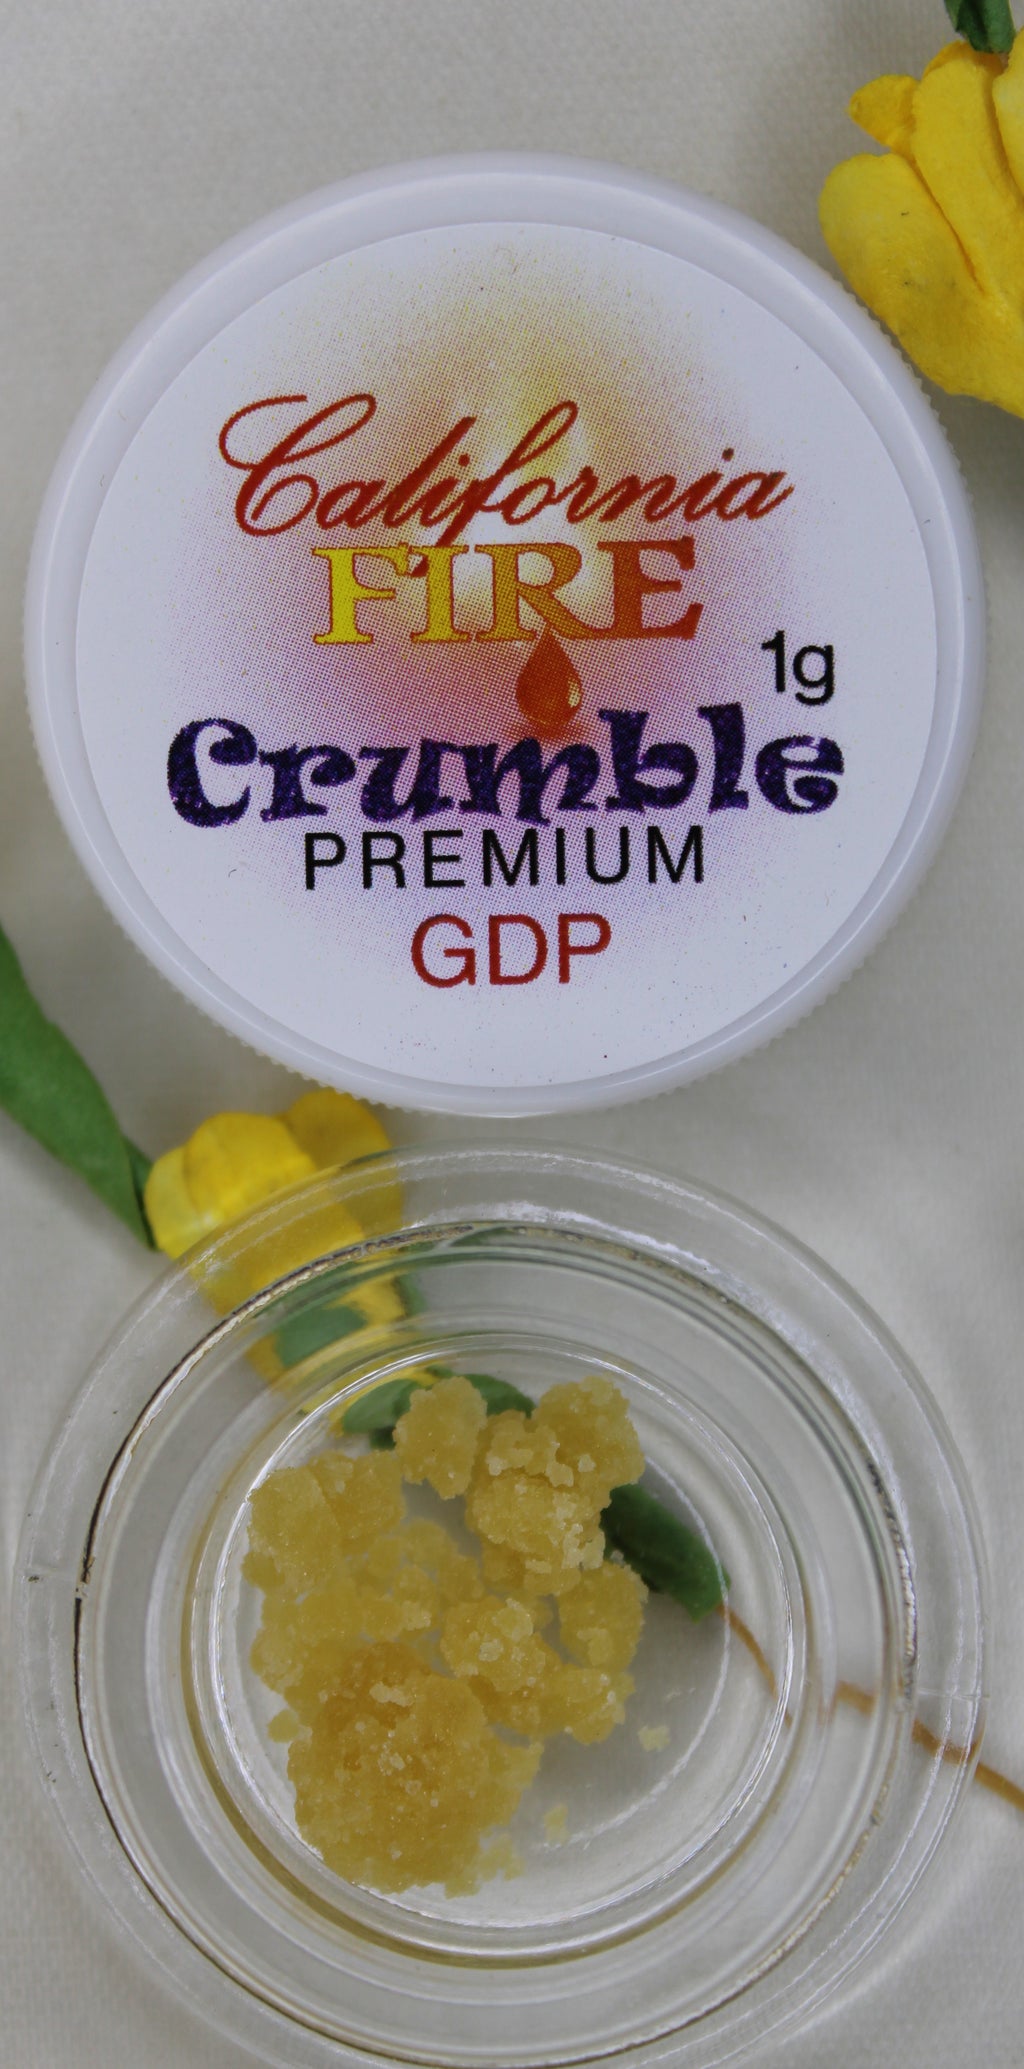 California Fire Premium Crumble "GDP" (1g)